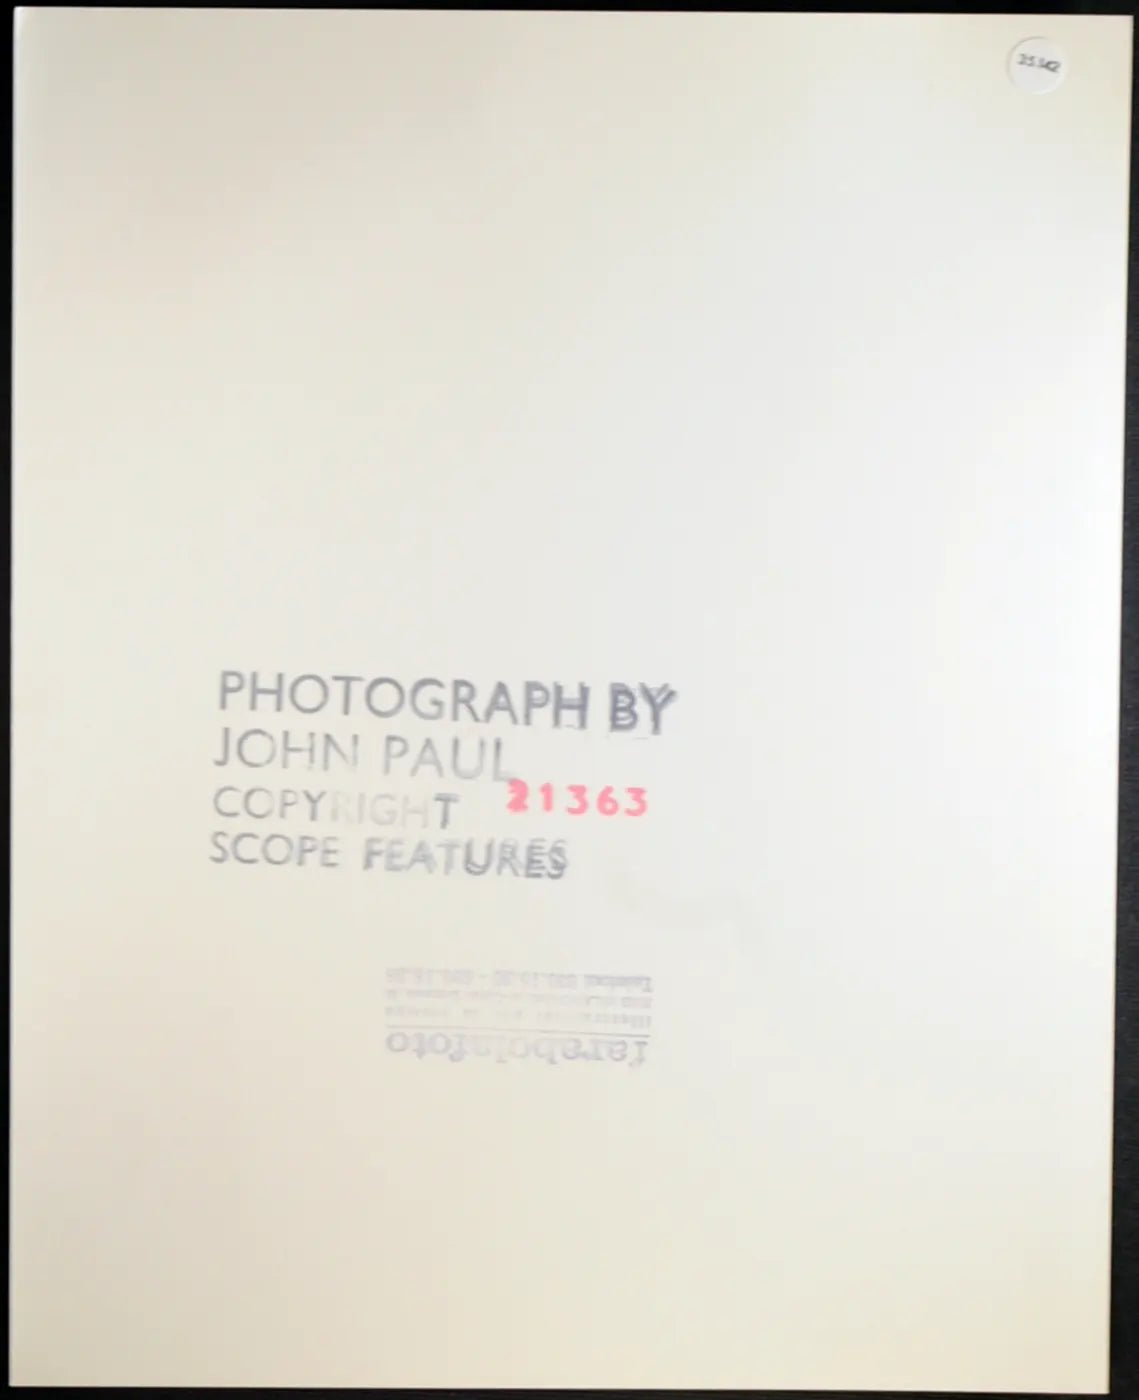 Karen Clarke anni 70 Ft 35142 - Stampa 20x25 cm - Farabola Stampa ai sali d'argento